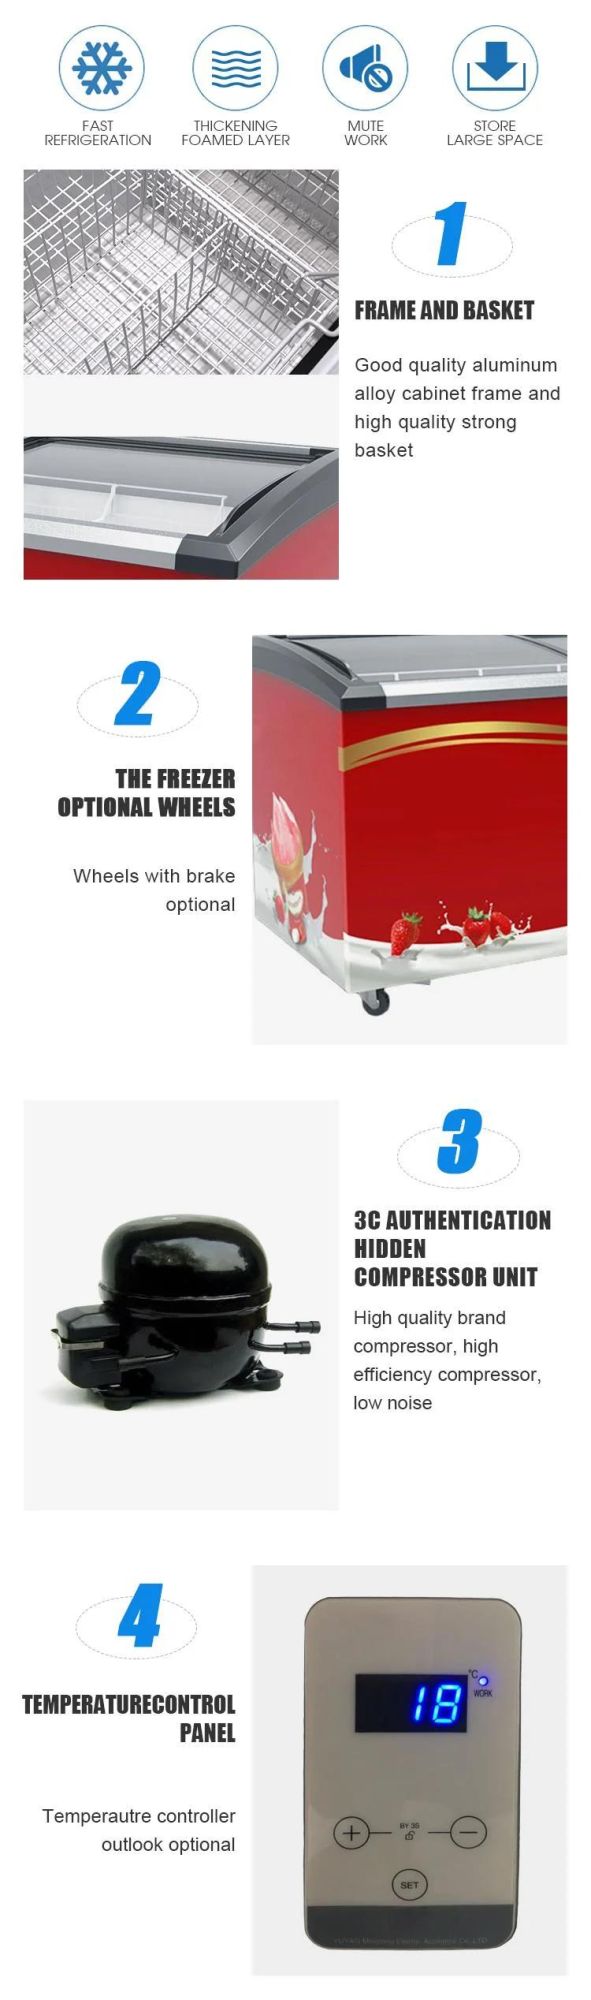 China Factory Wholesale Price Curved Sliding Glass Door 168L Mini Ice Cream Showcase Chest Freezer